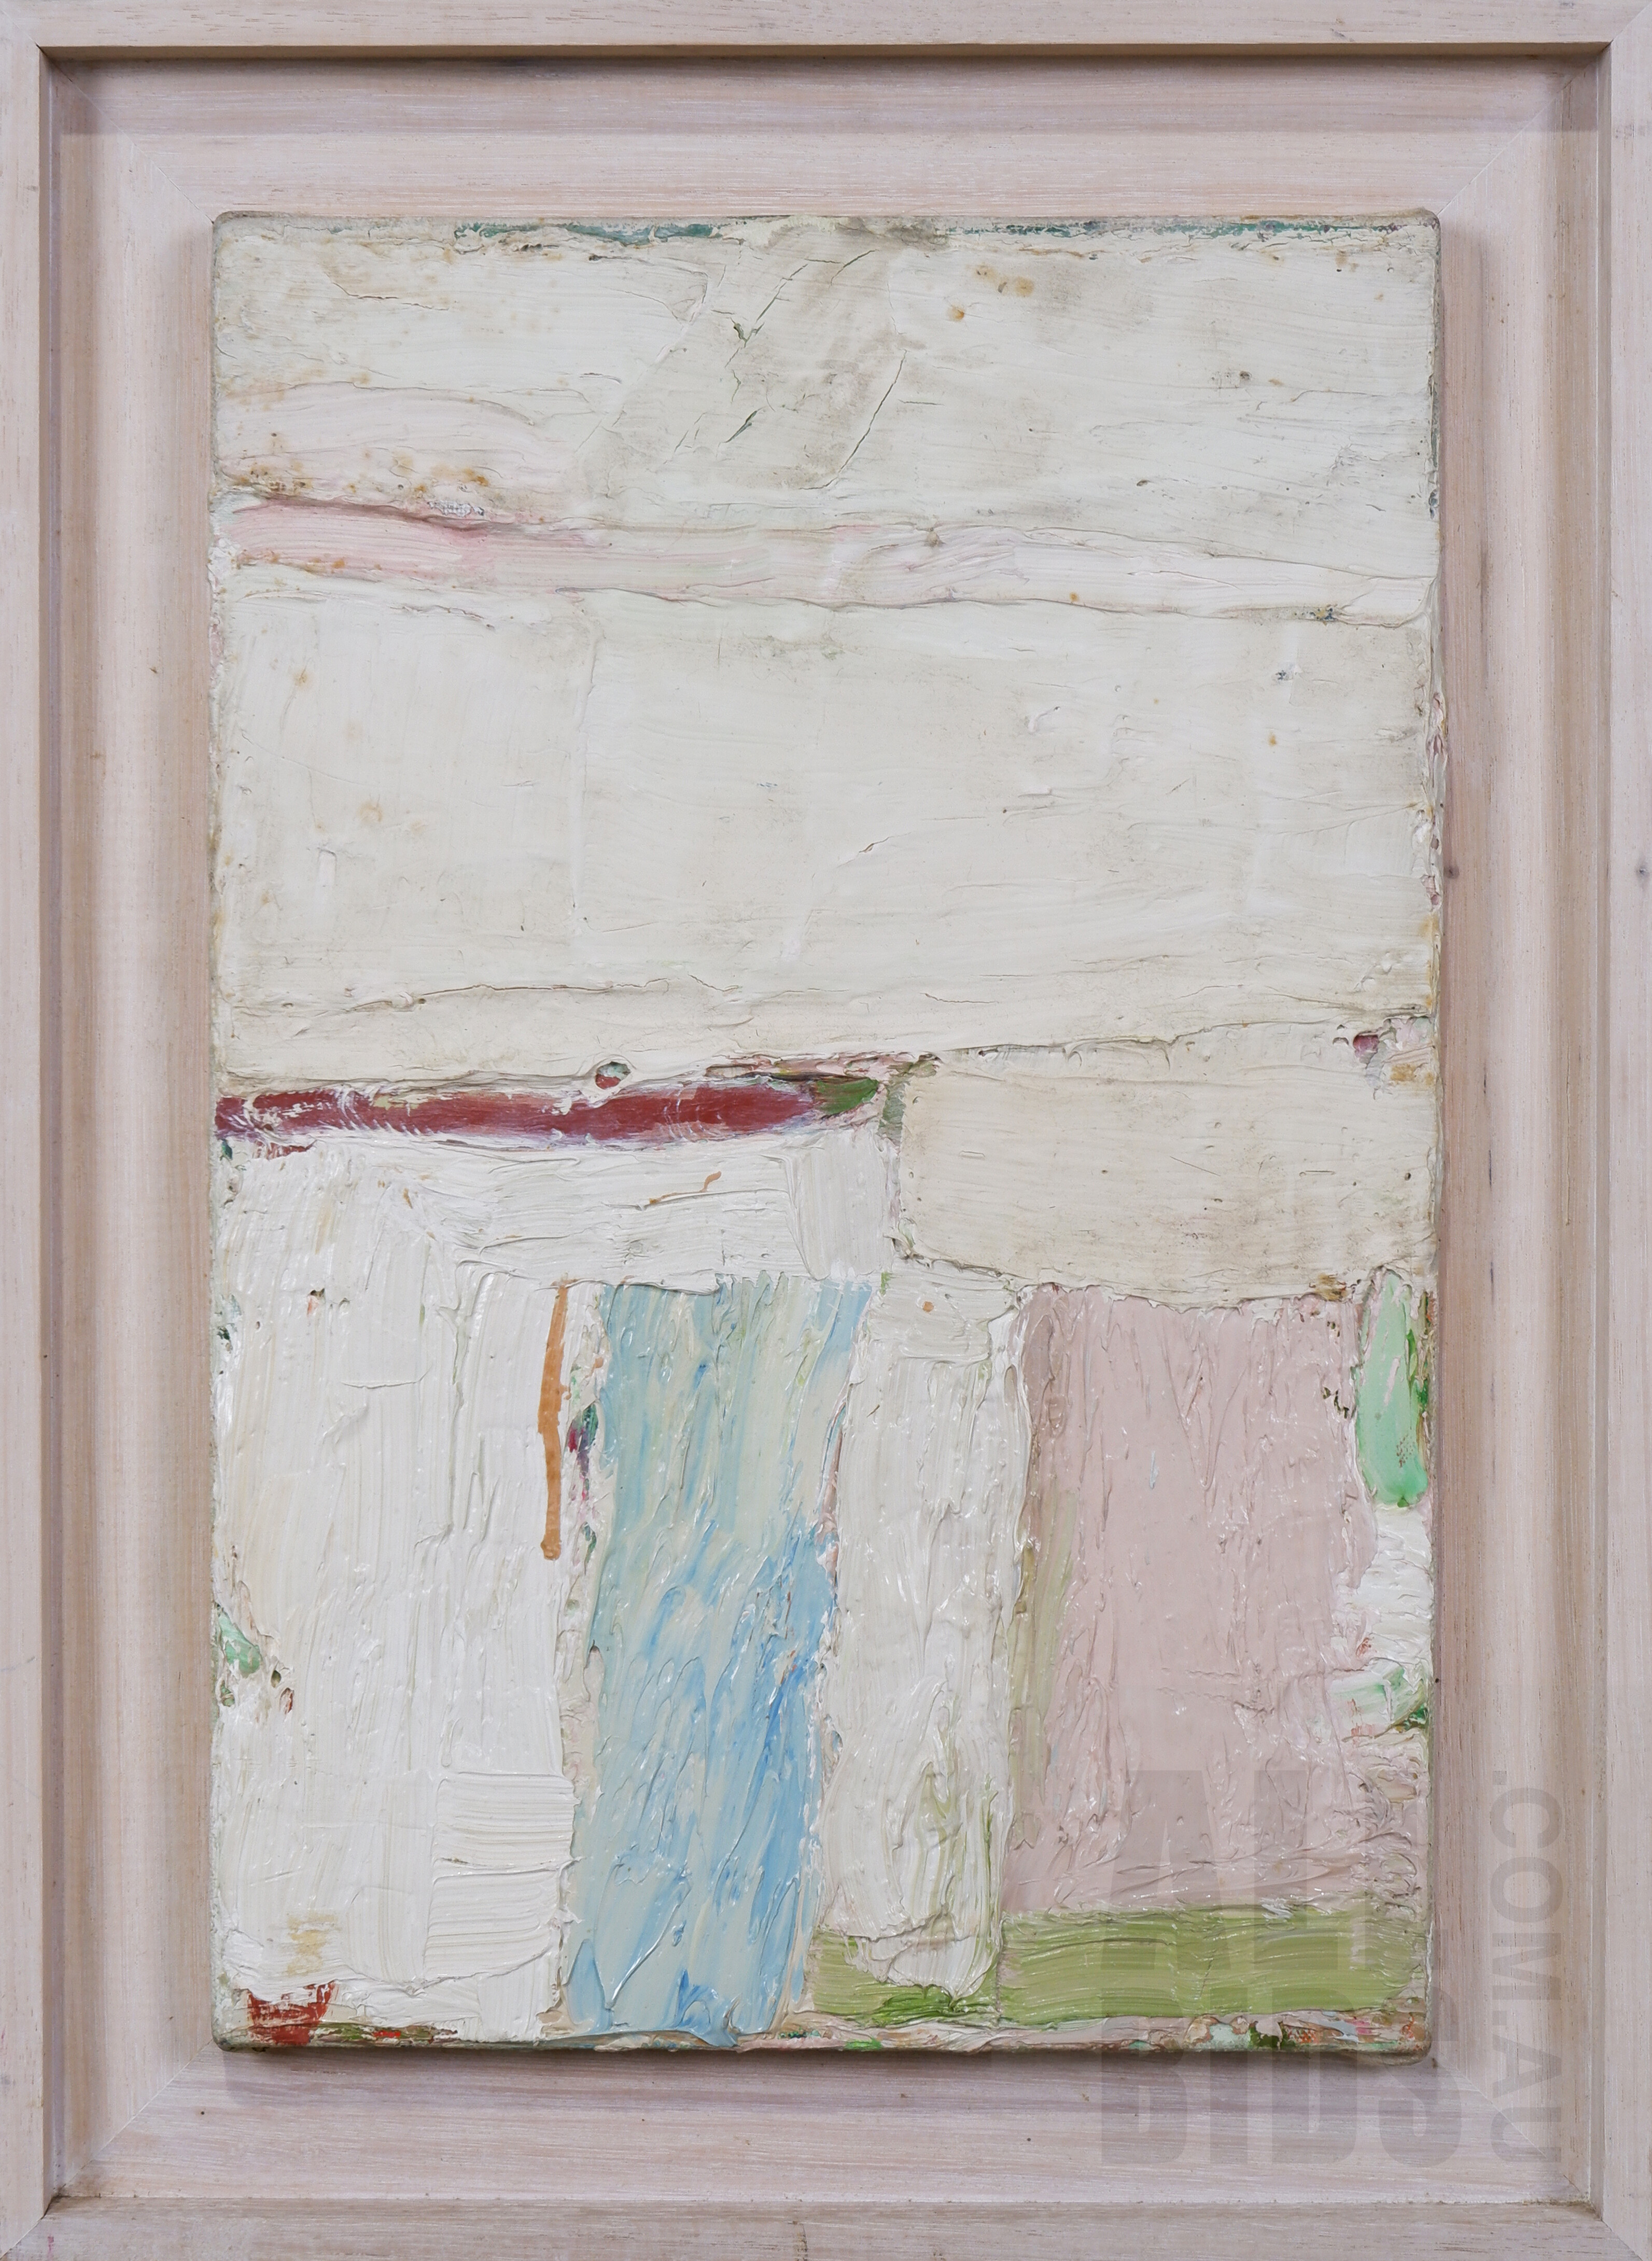 'Steven Harvey (born 1965), Longview 1997, Oil on Canvas, 36 x 24 cm'